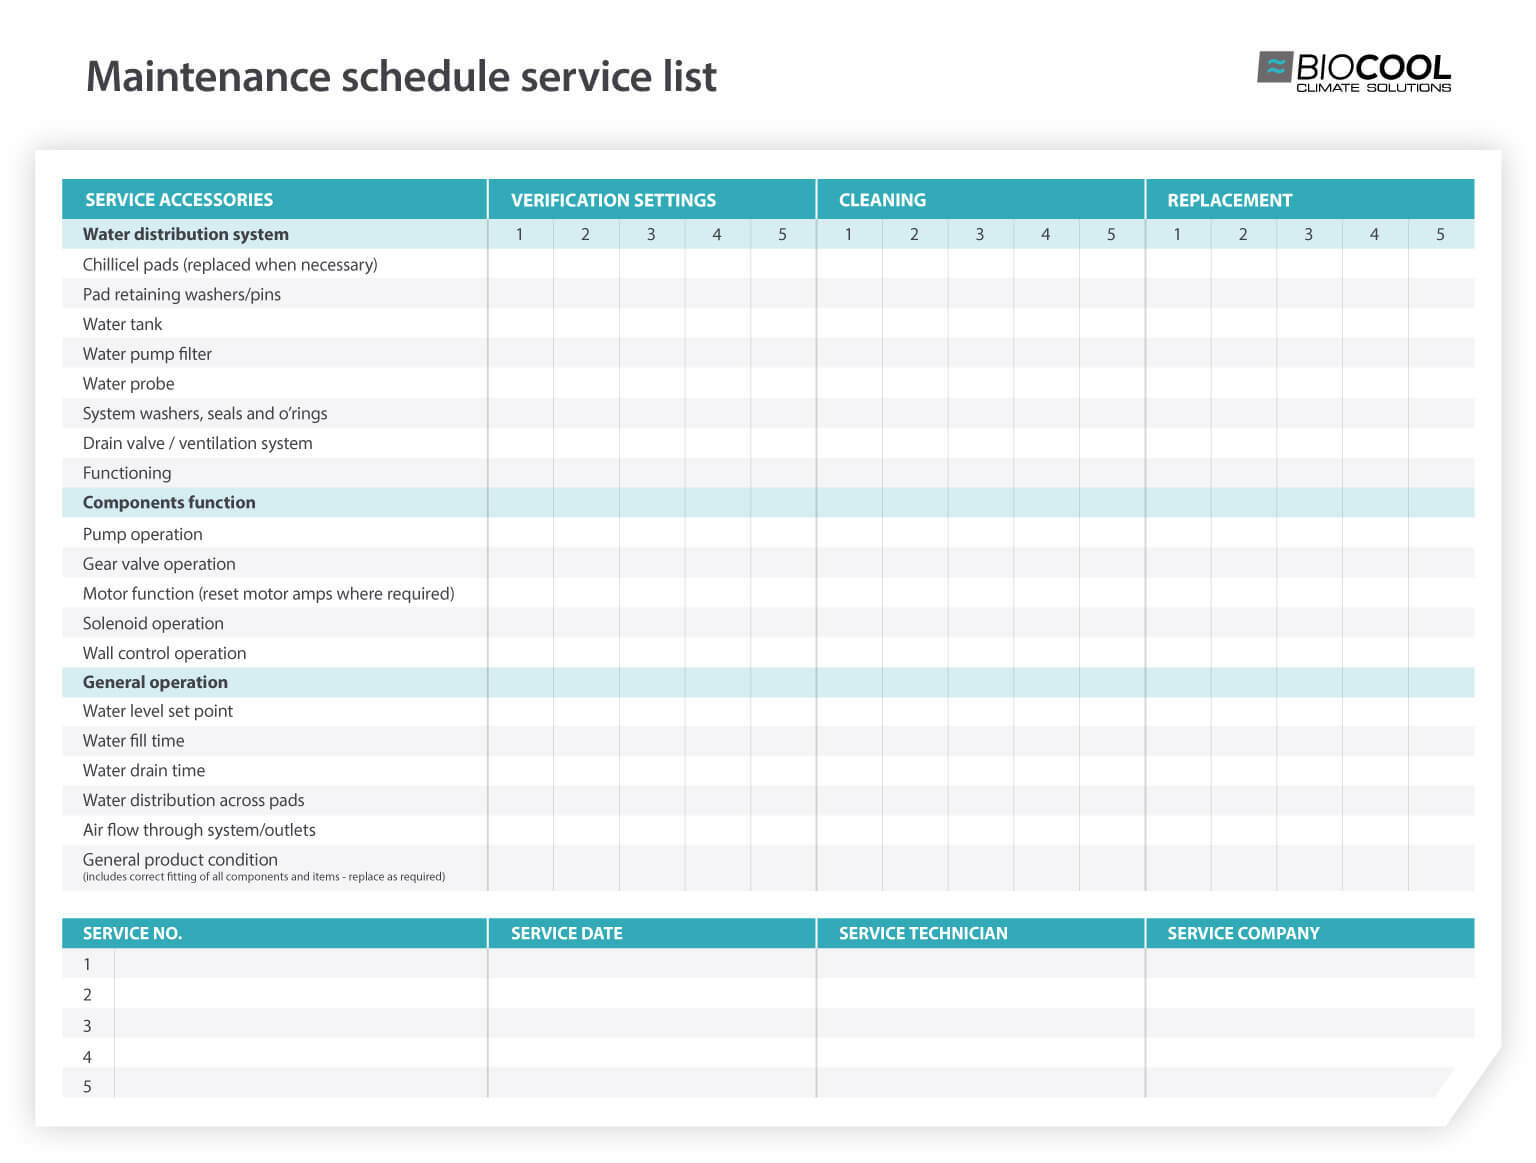 Evaporative cooler maintenance schedule service list